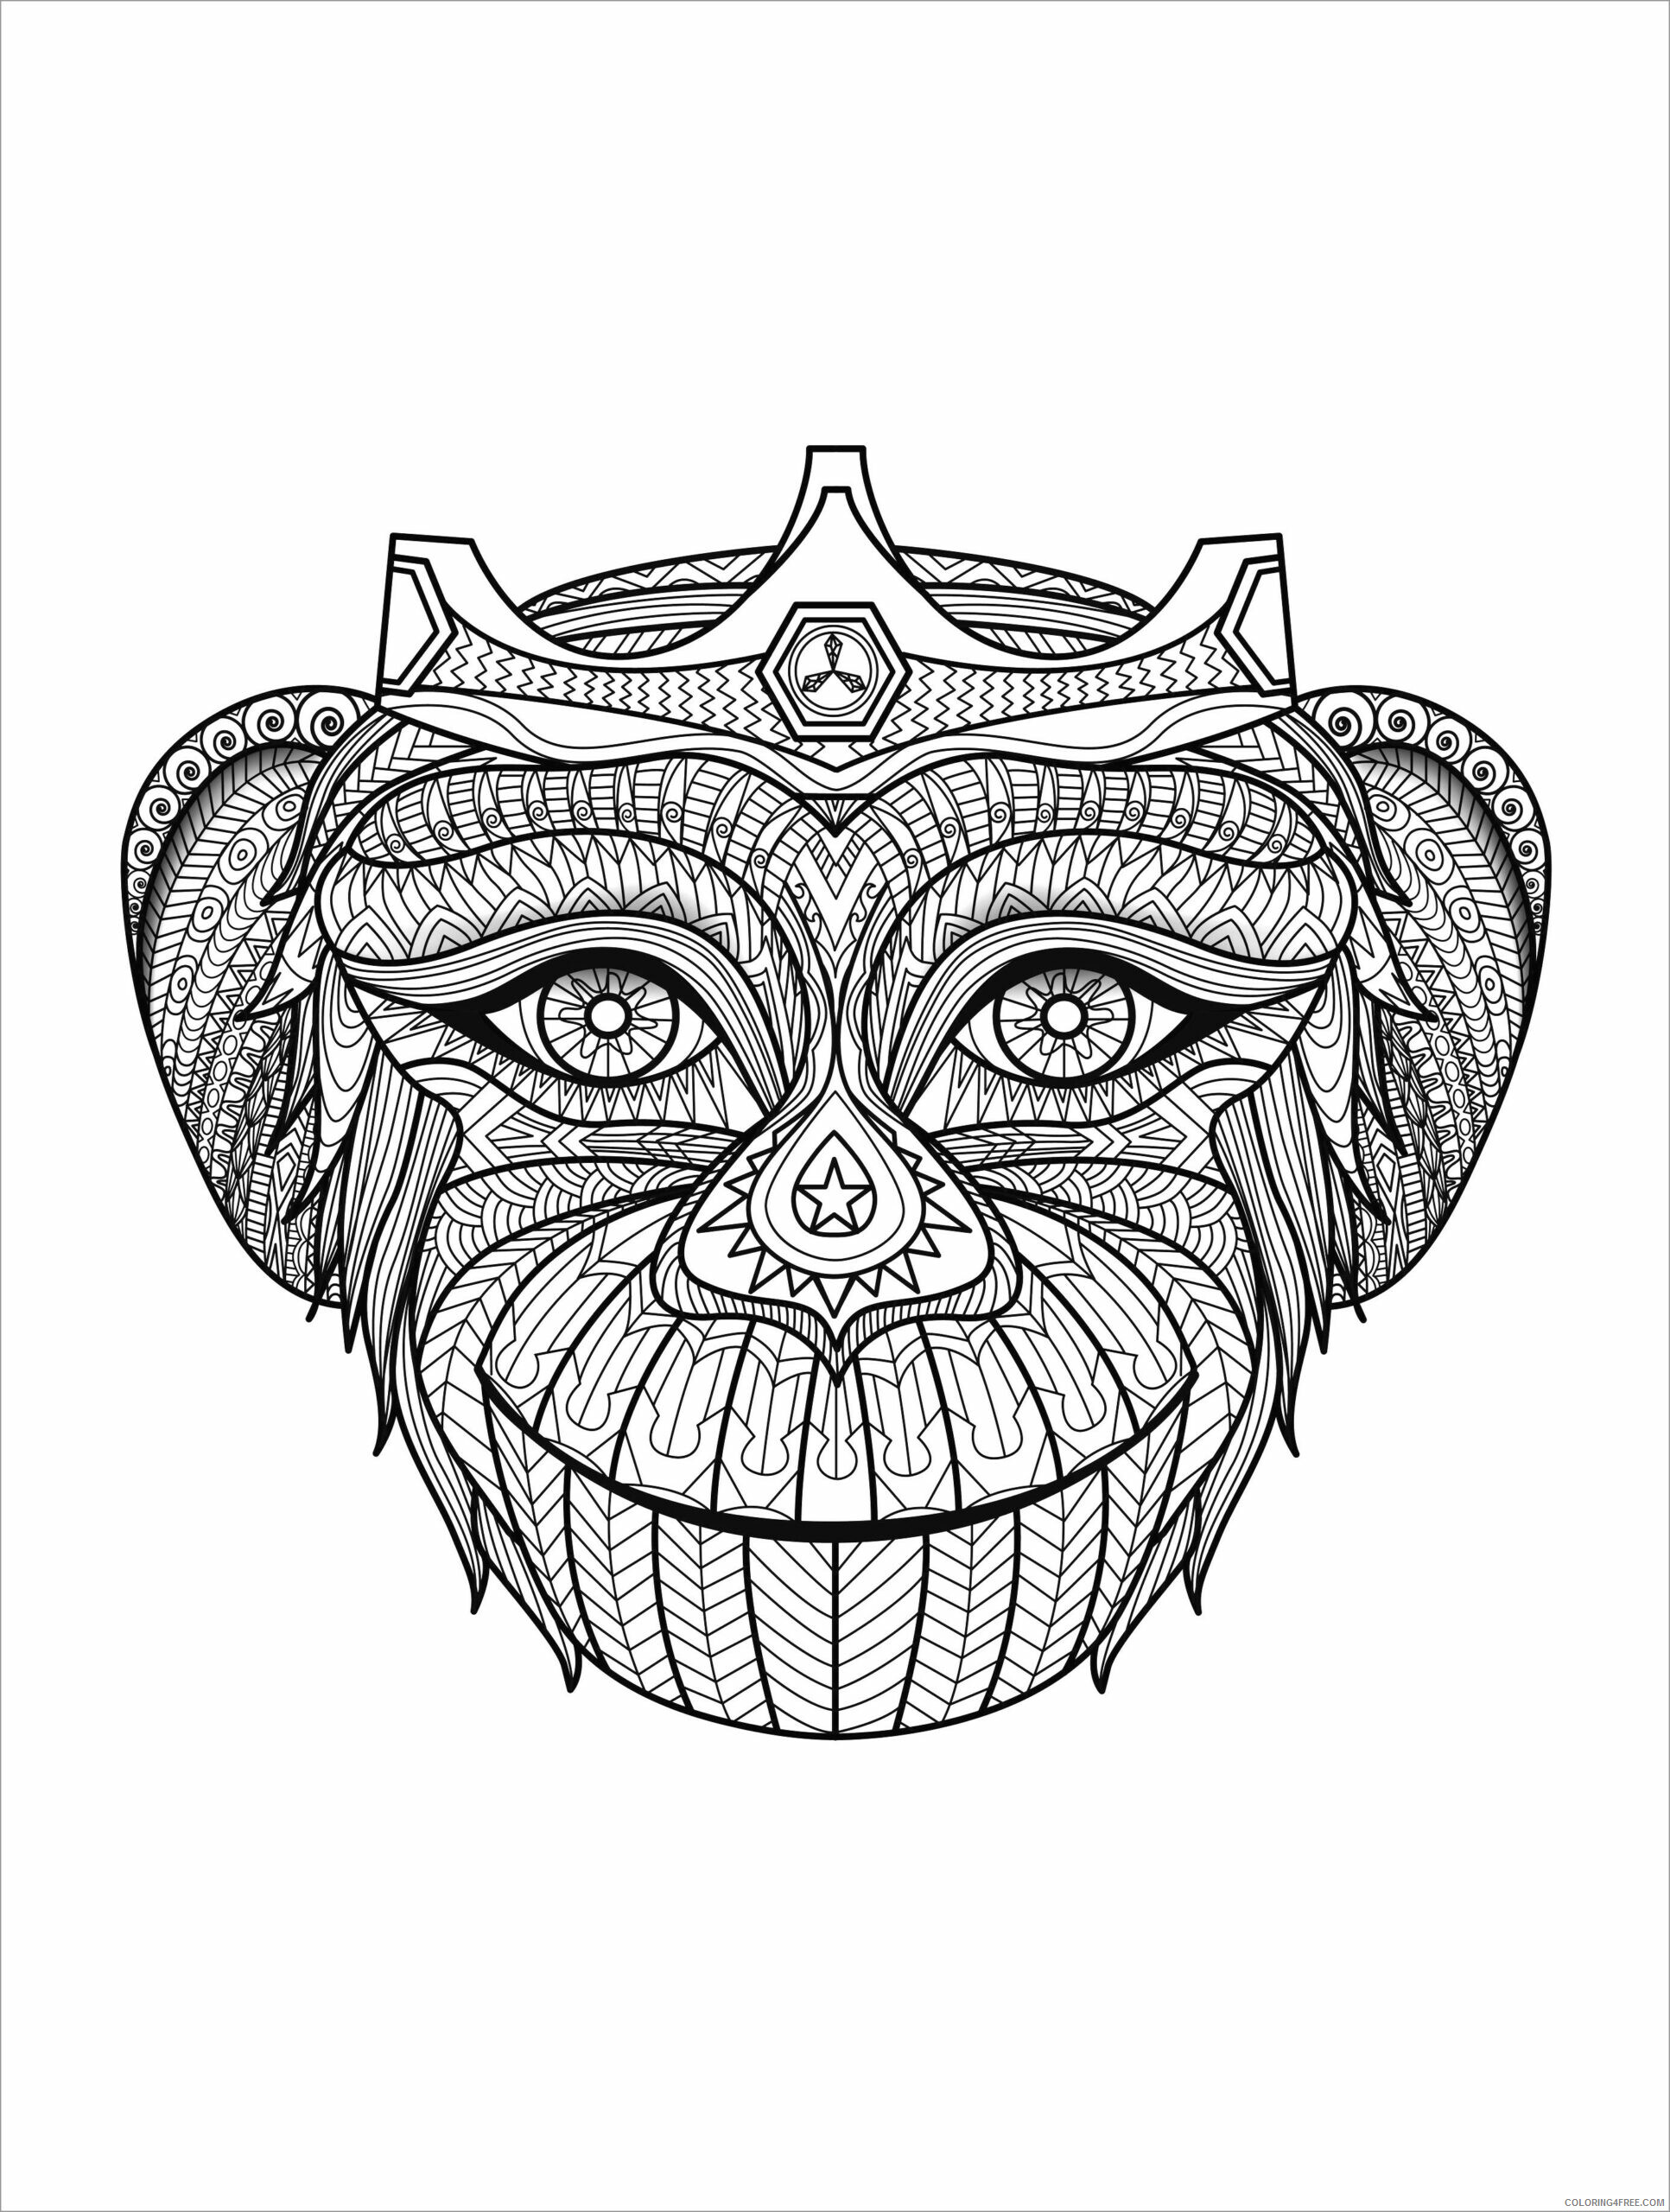 Mandala Coloring Pages Adult animal mandala moneky head Printable 2020 515 Coloring4free